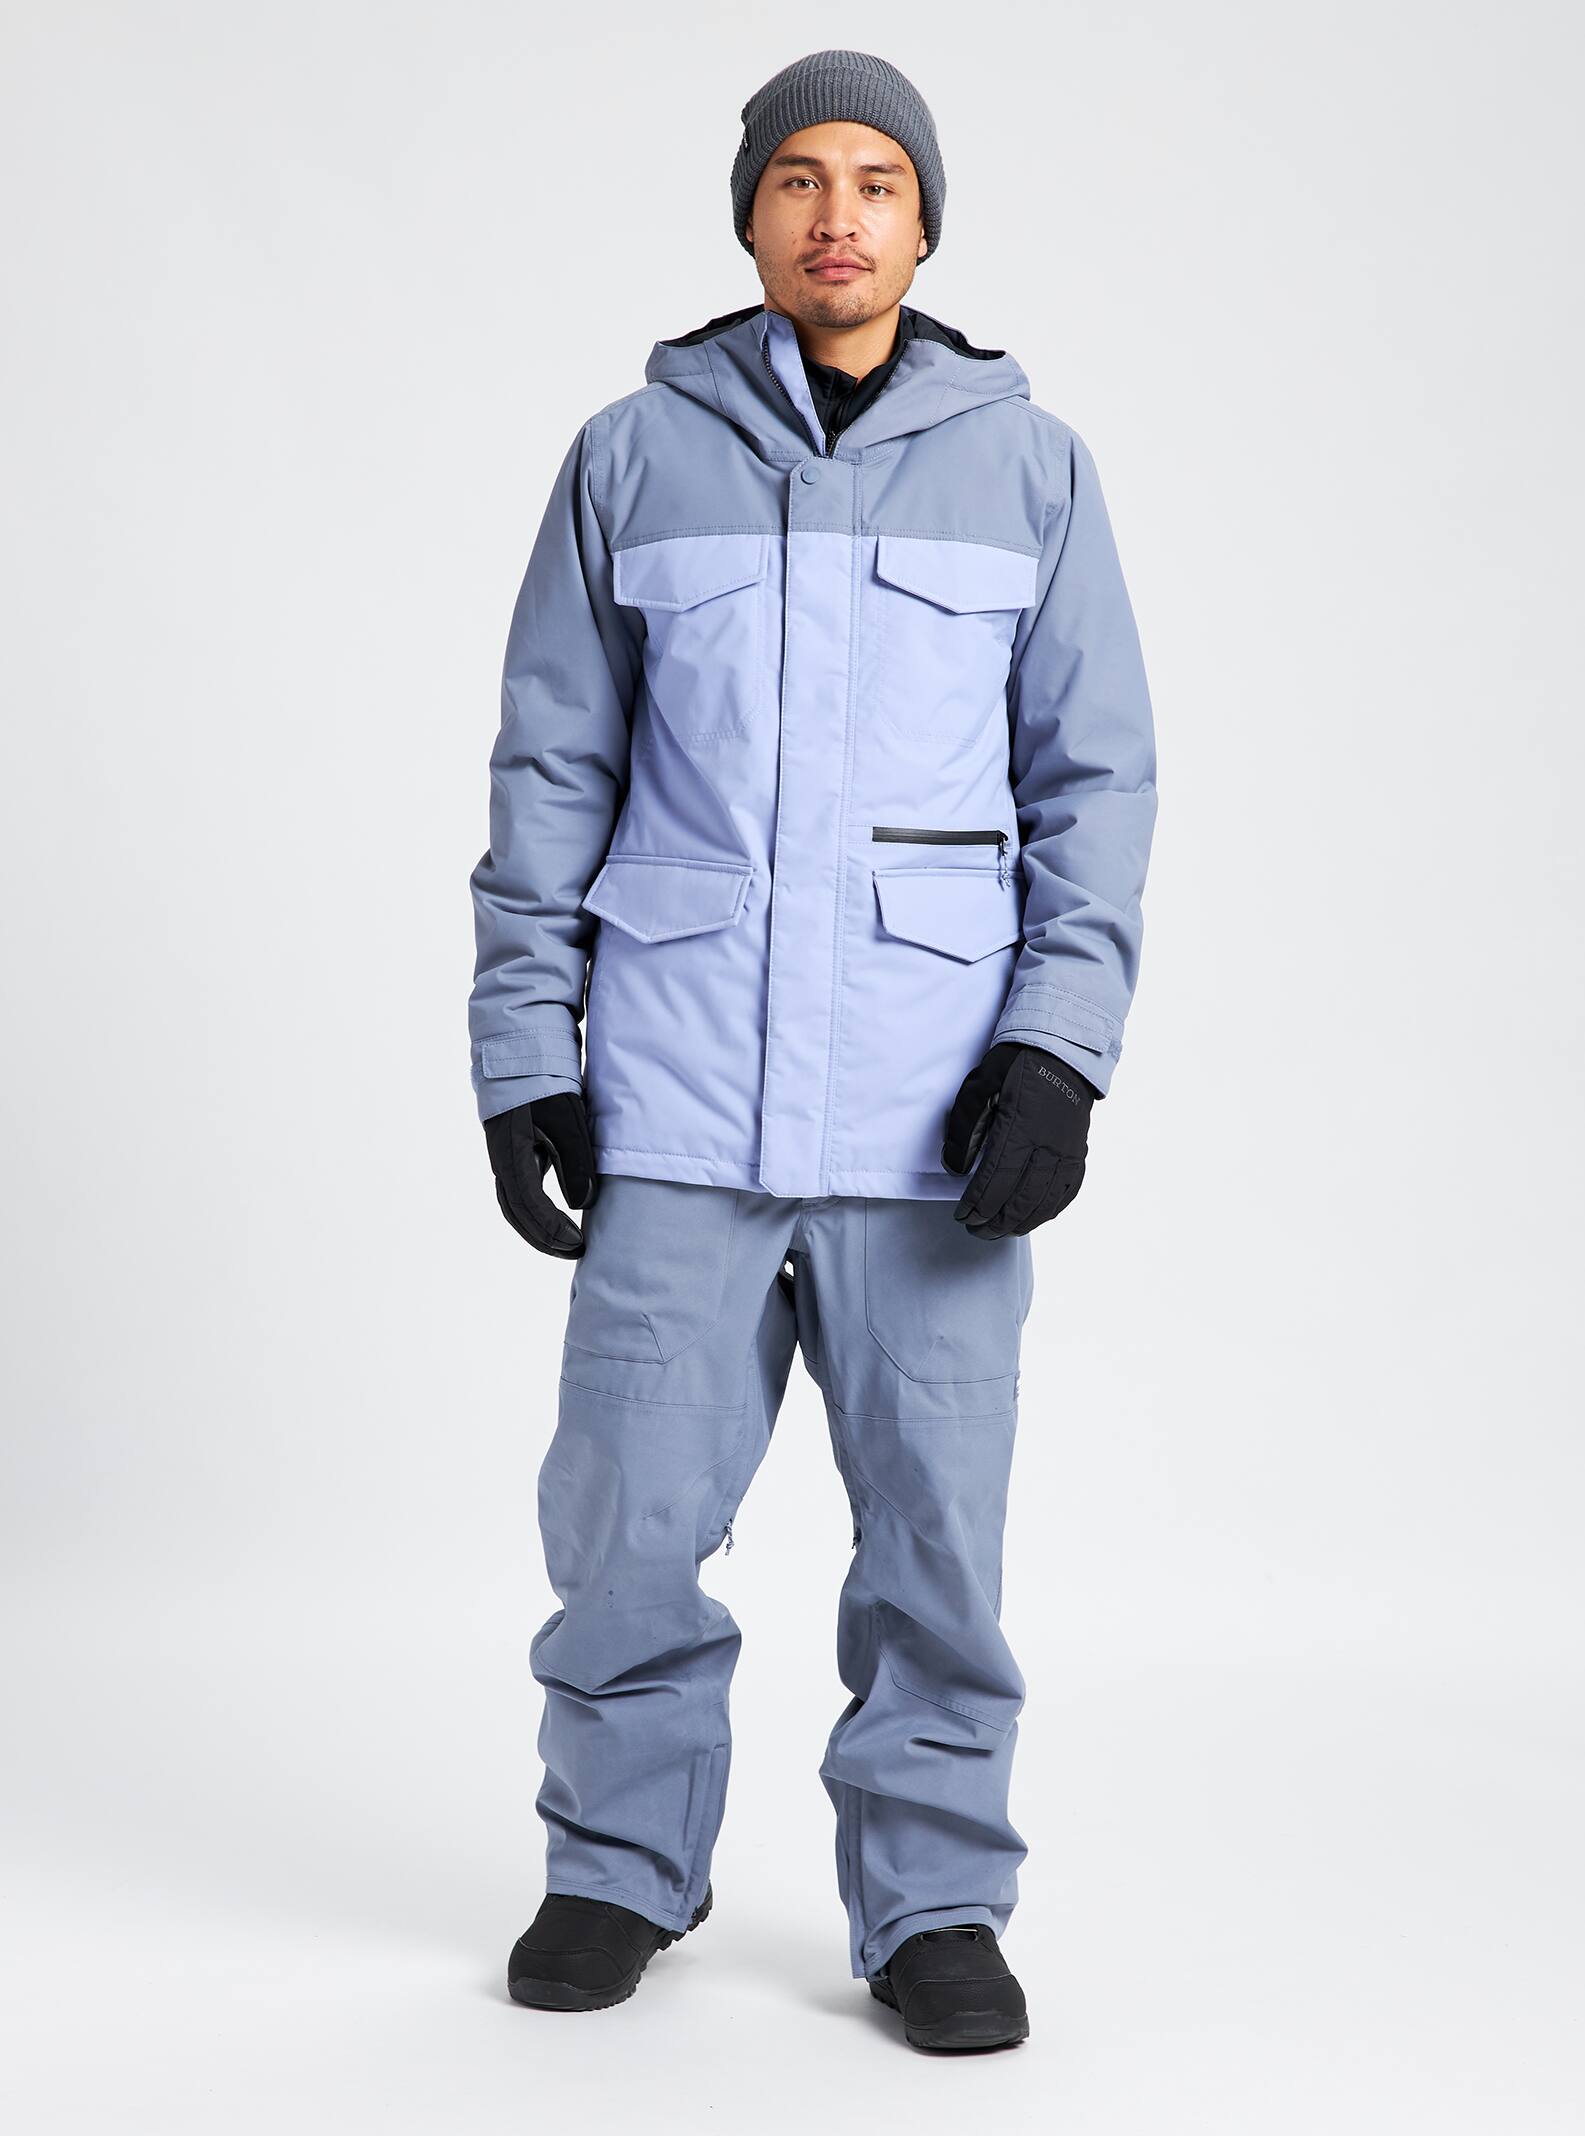 Burton Covert Herren Snowboard Ski Jacke blau/grau muster Gr L NEU 